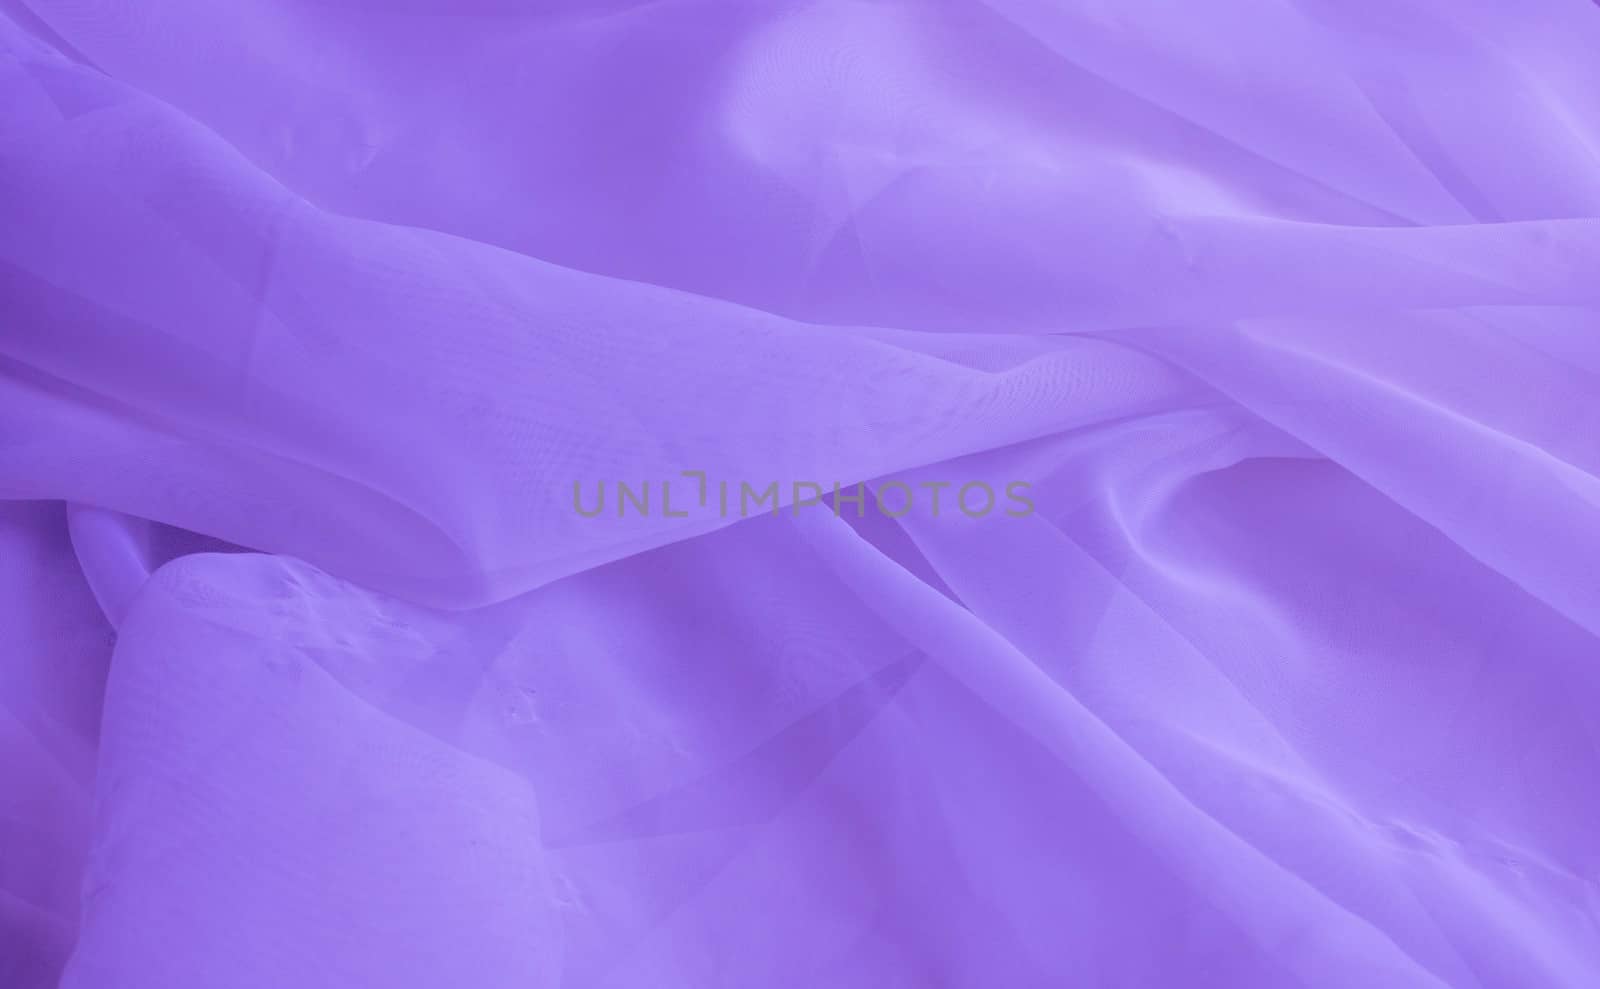 Texture, background, silk transparent fabric, lilac shade.